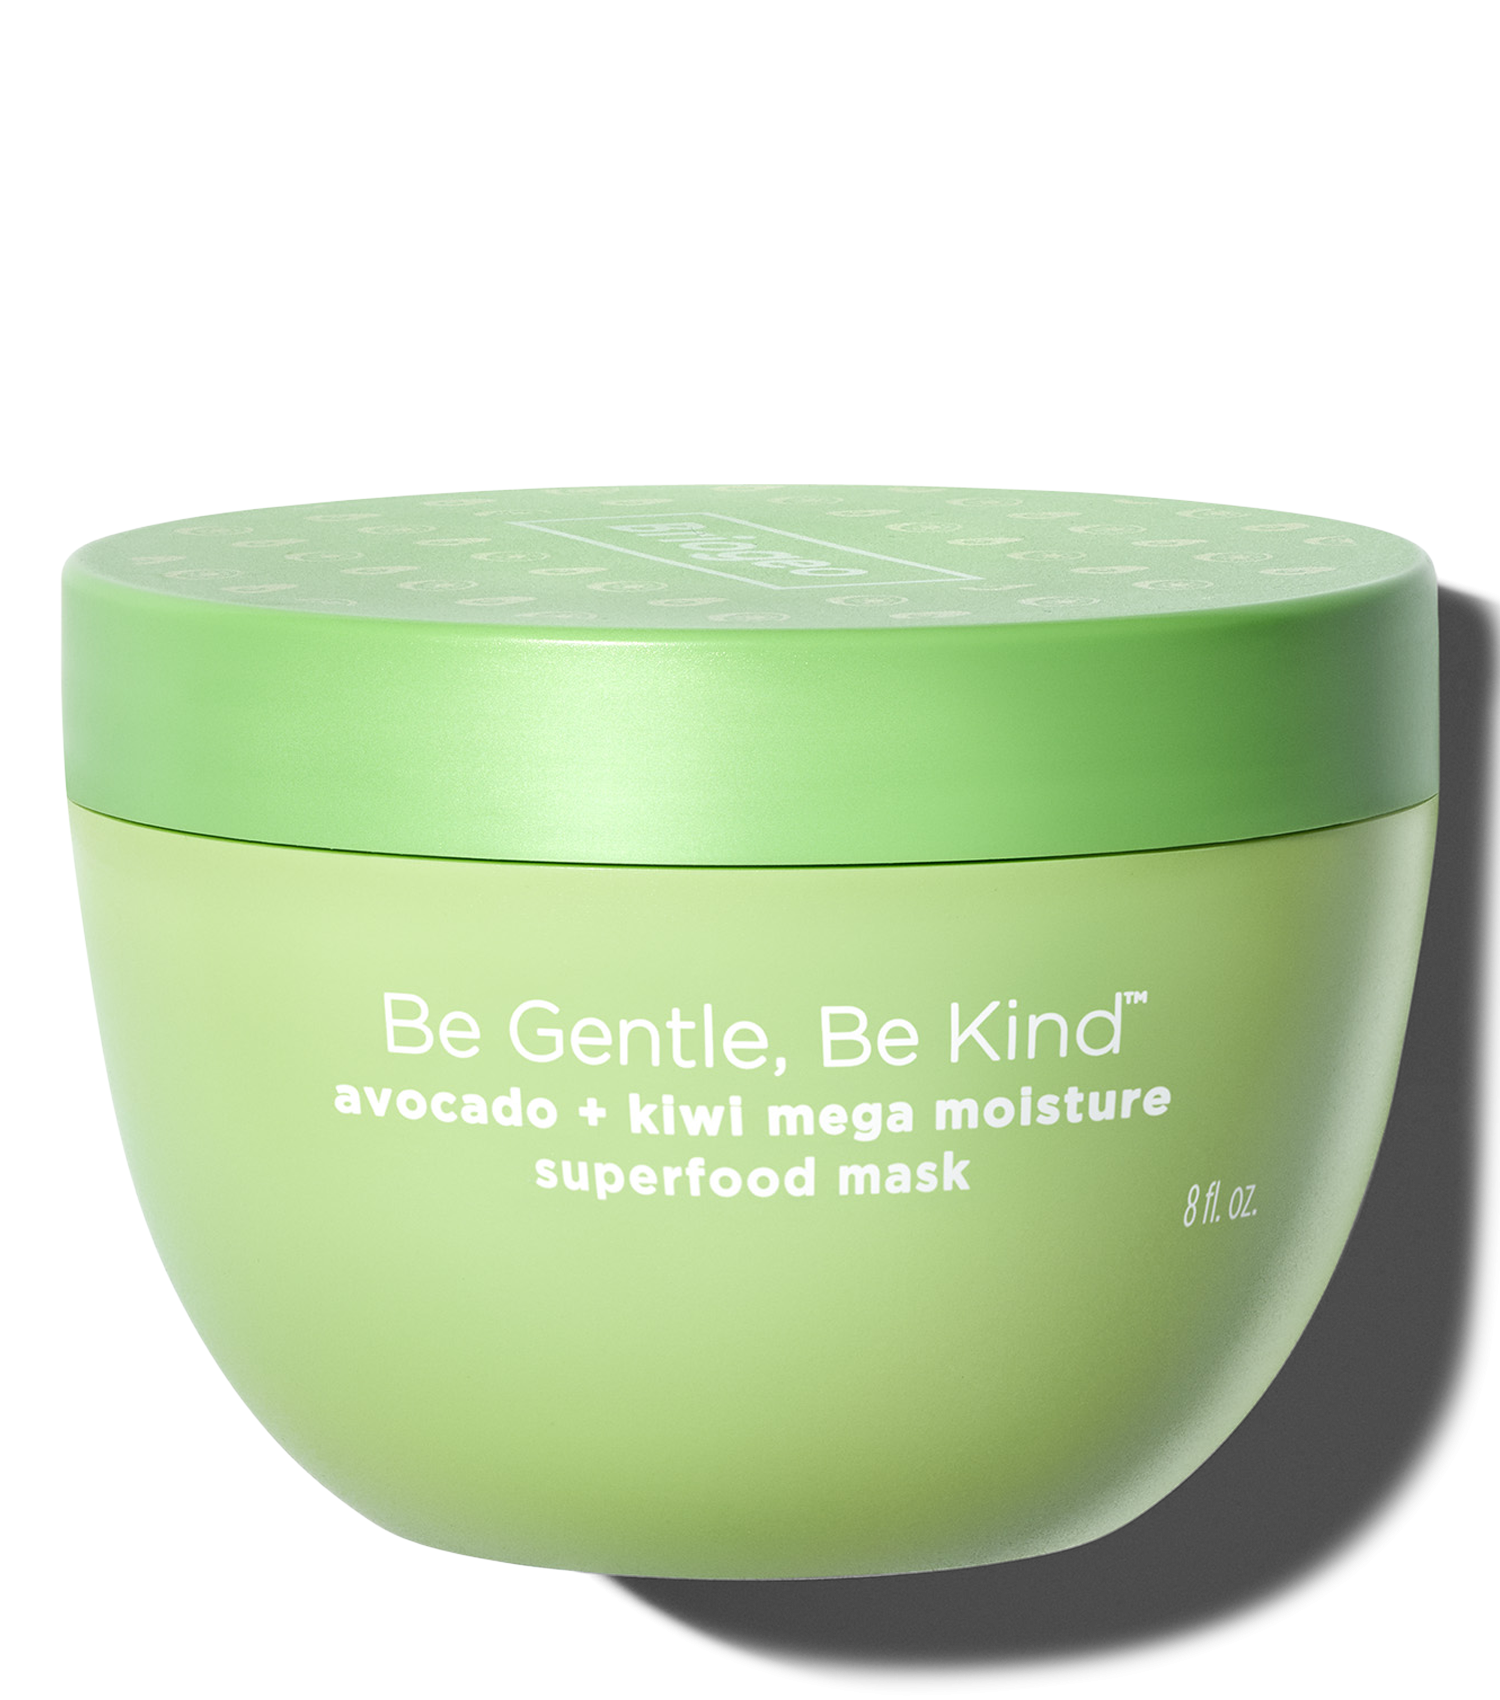 Briogeo Be Gentle, Be Kind Avocado + Kiwi Mega Moisture Mask